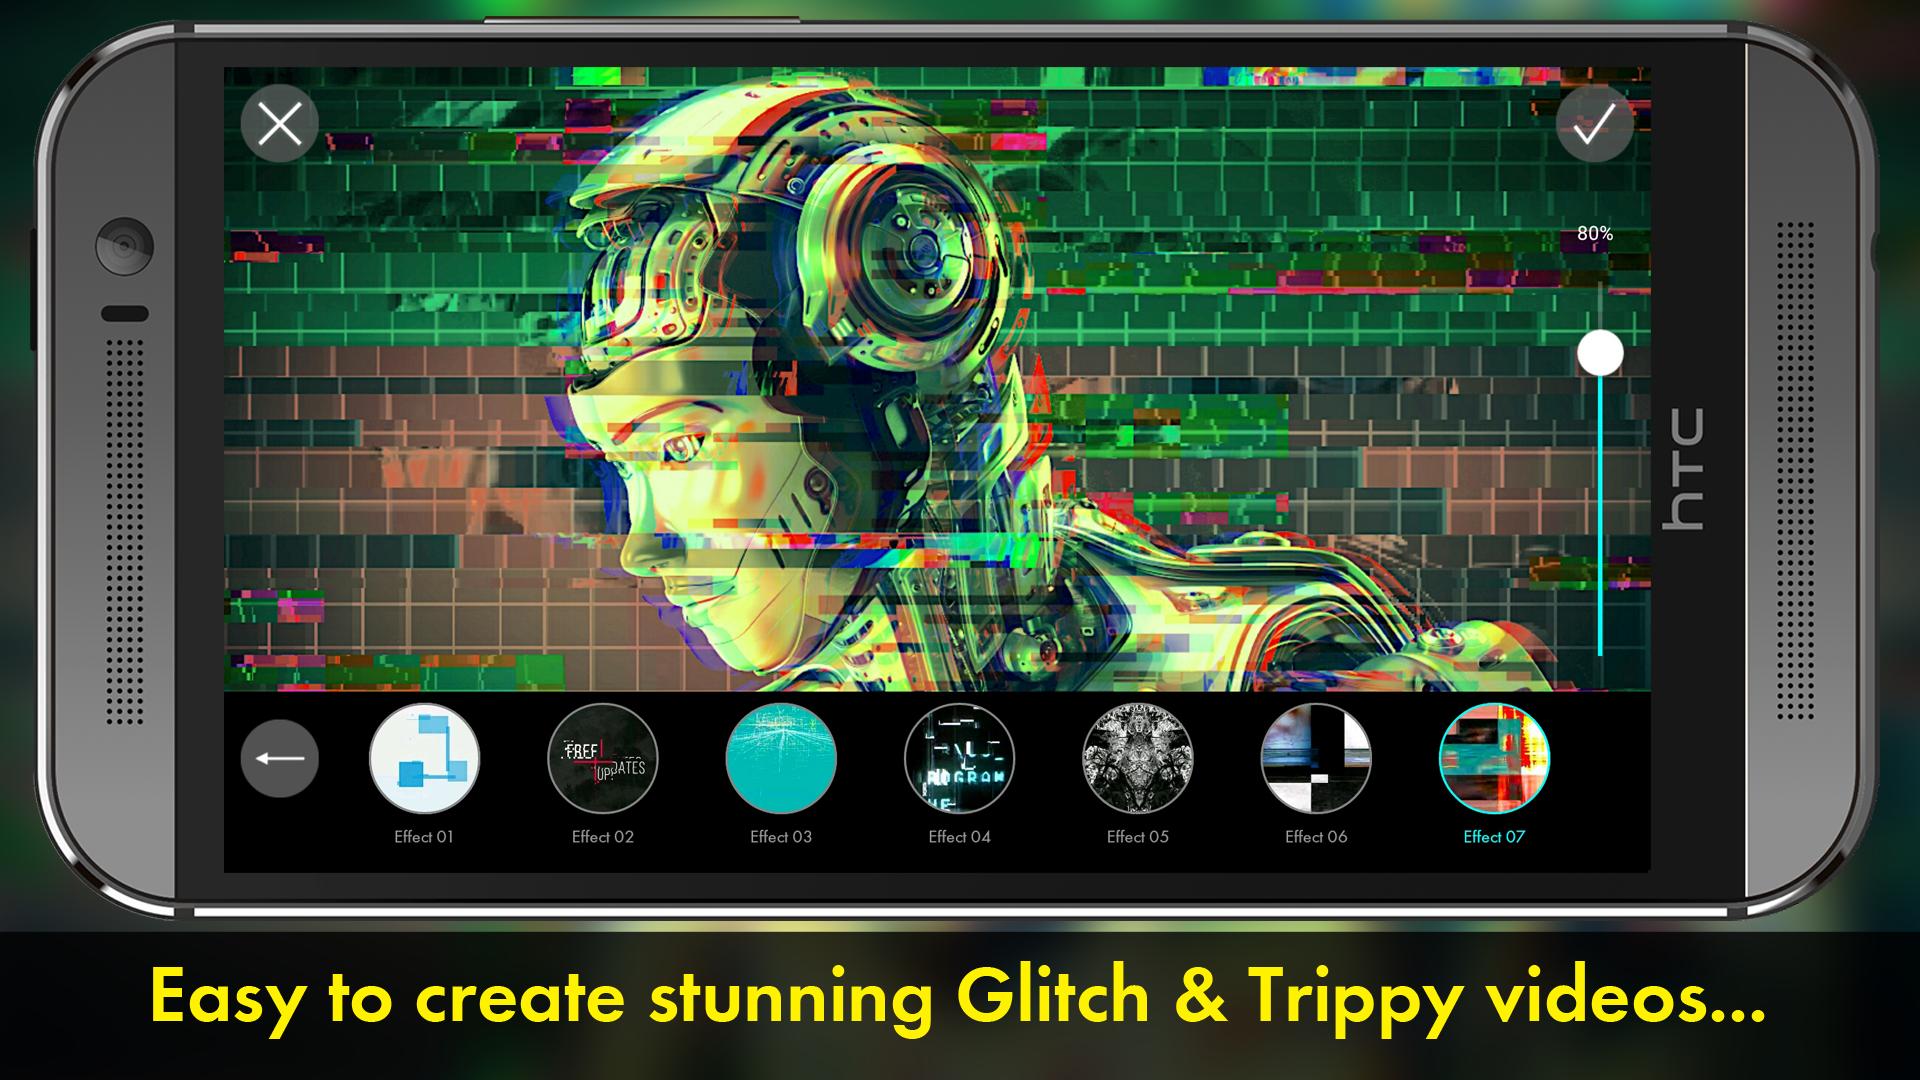 Effect android. Glitch! APK. Android Glitch app. Glitch (Video game). Glitch app Store.